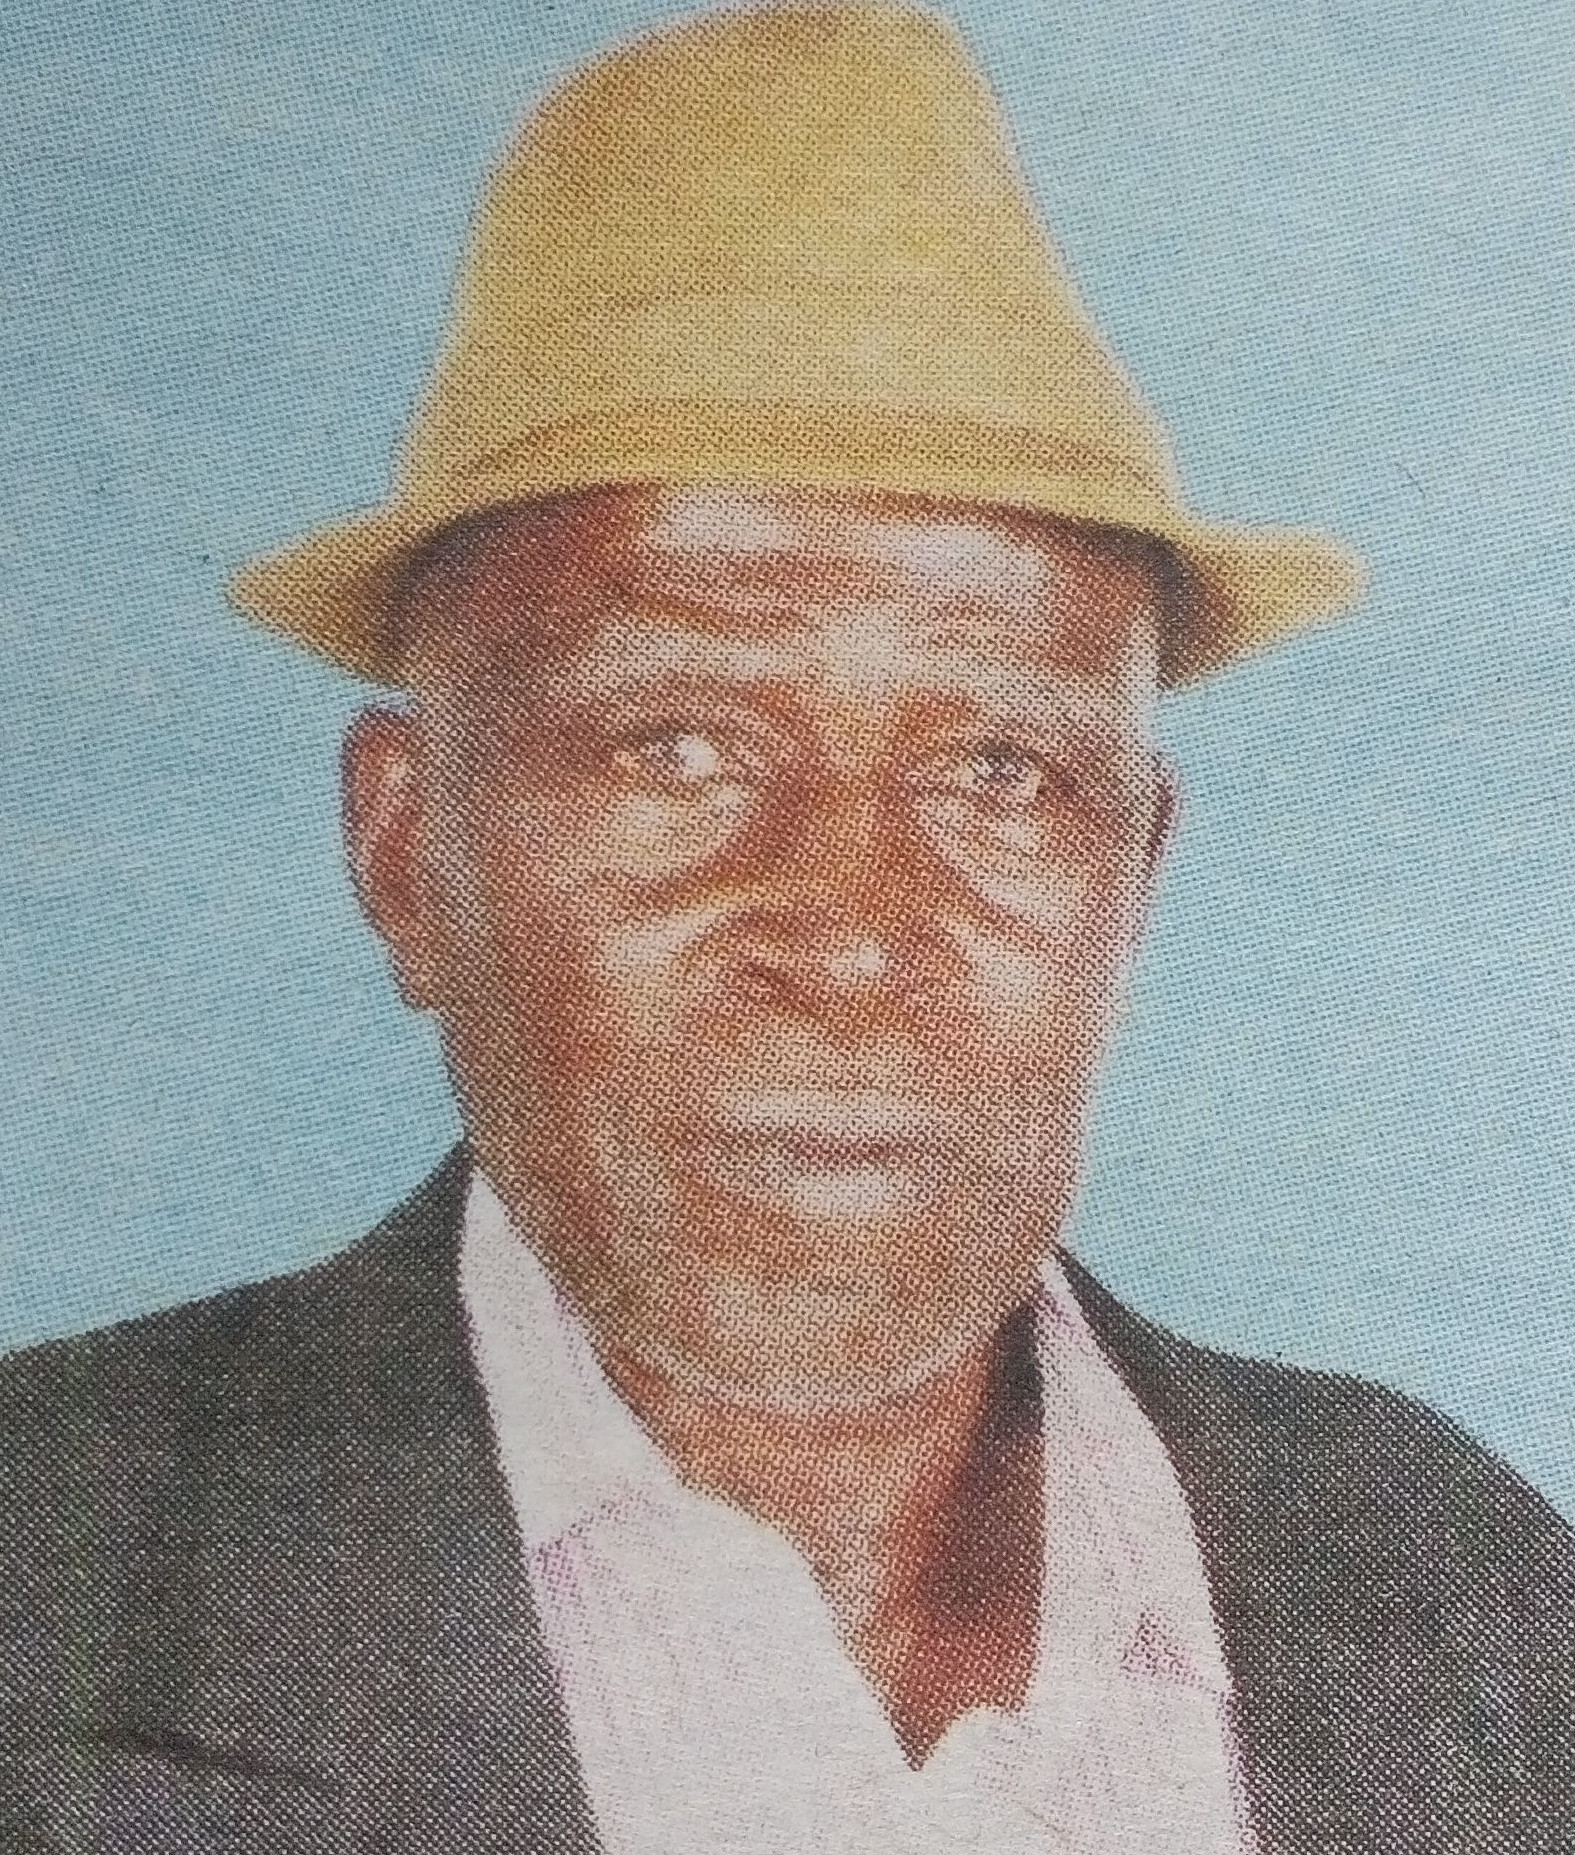 Obituary Image of Joseph Nderitu King’ori